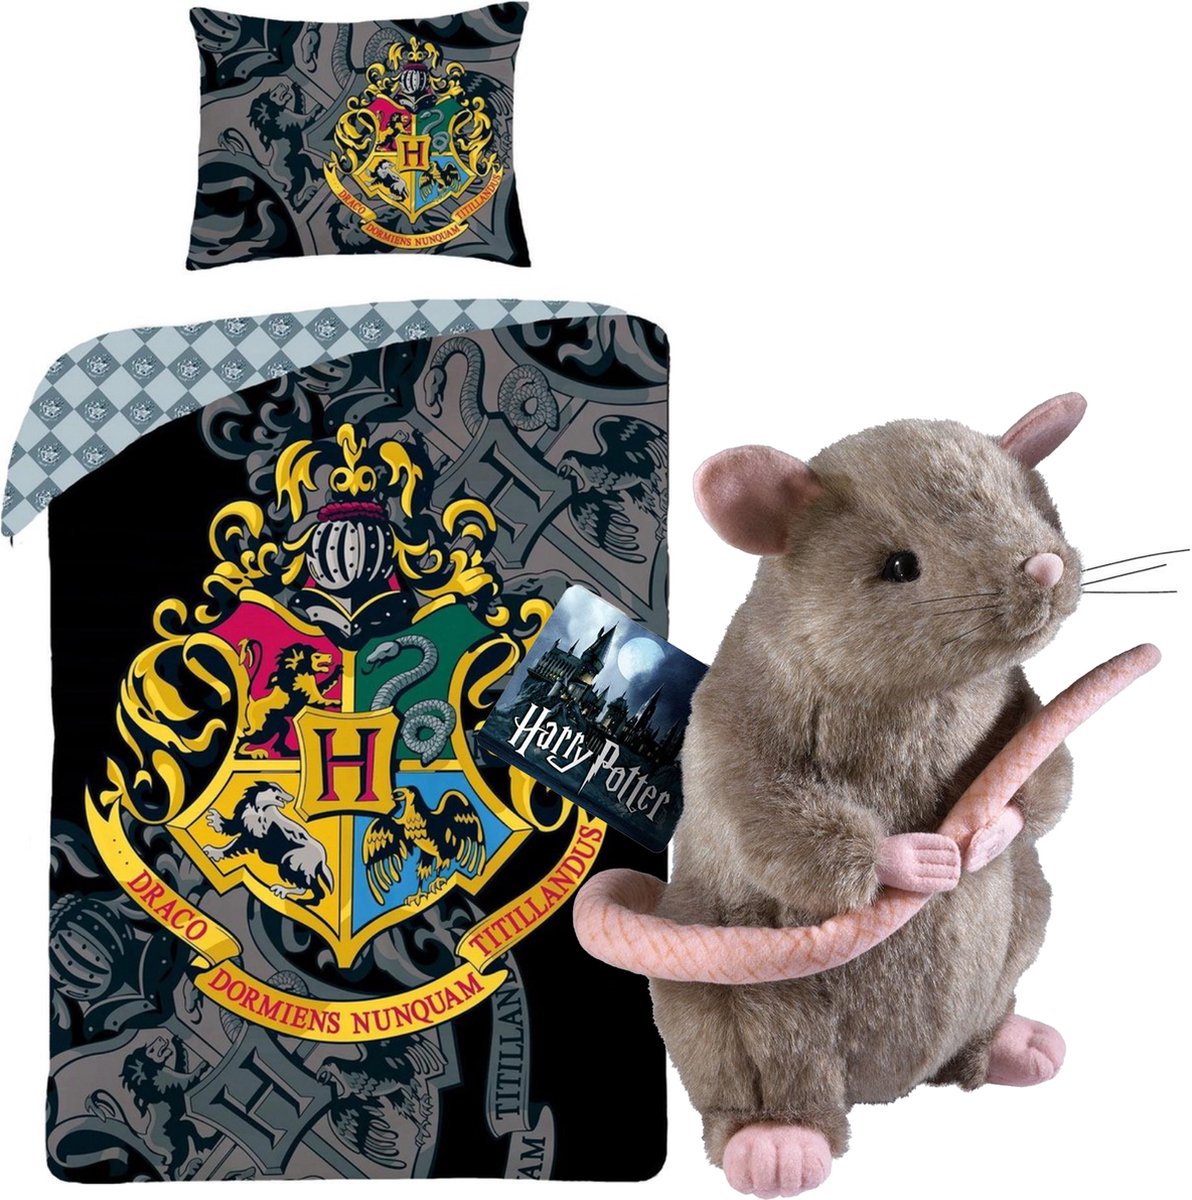 Harry Potter Dekbedovertrek- Katoen- 1persoons- 140x200- Dekbed Hogwarts Logo -Zwart, incl. Pluche rat 